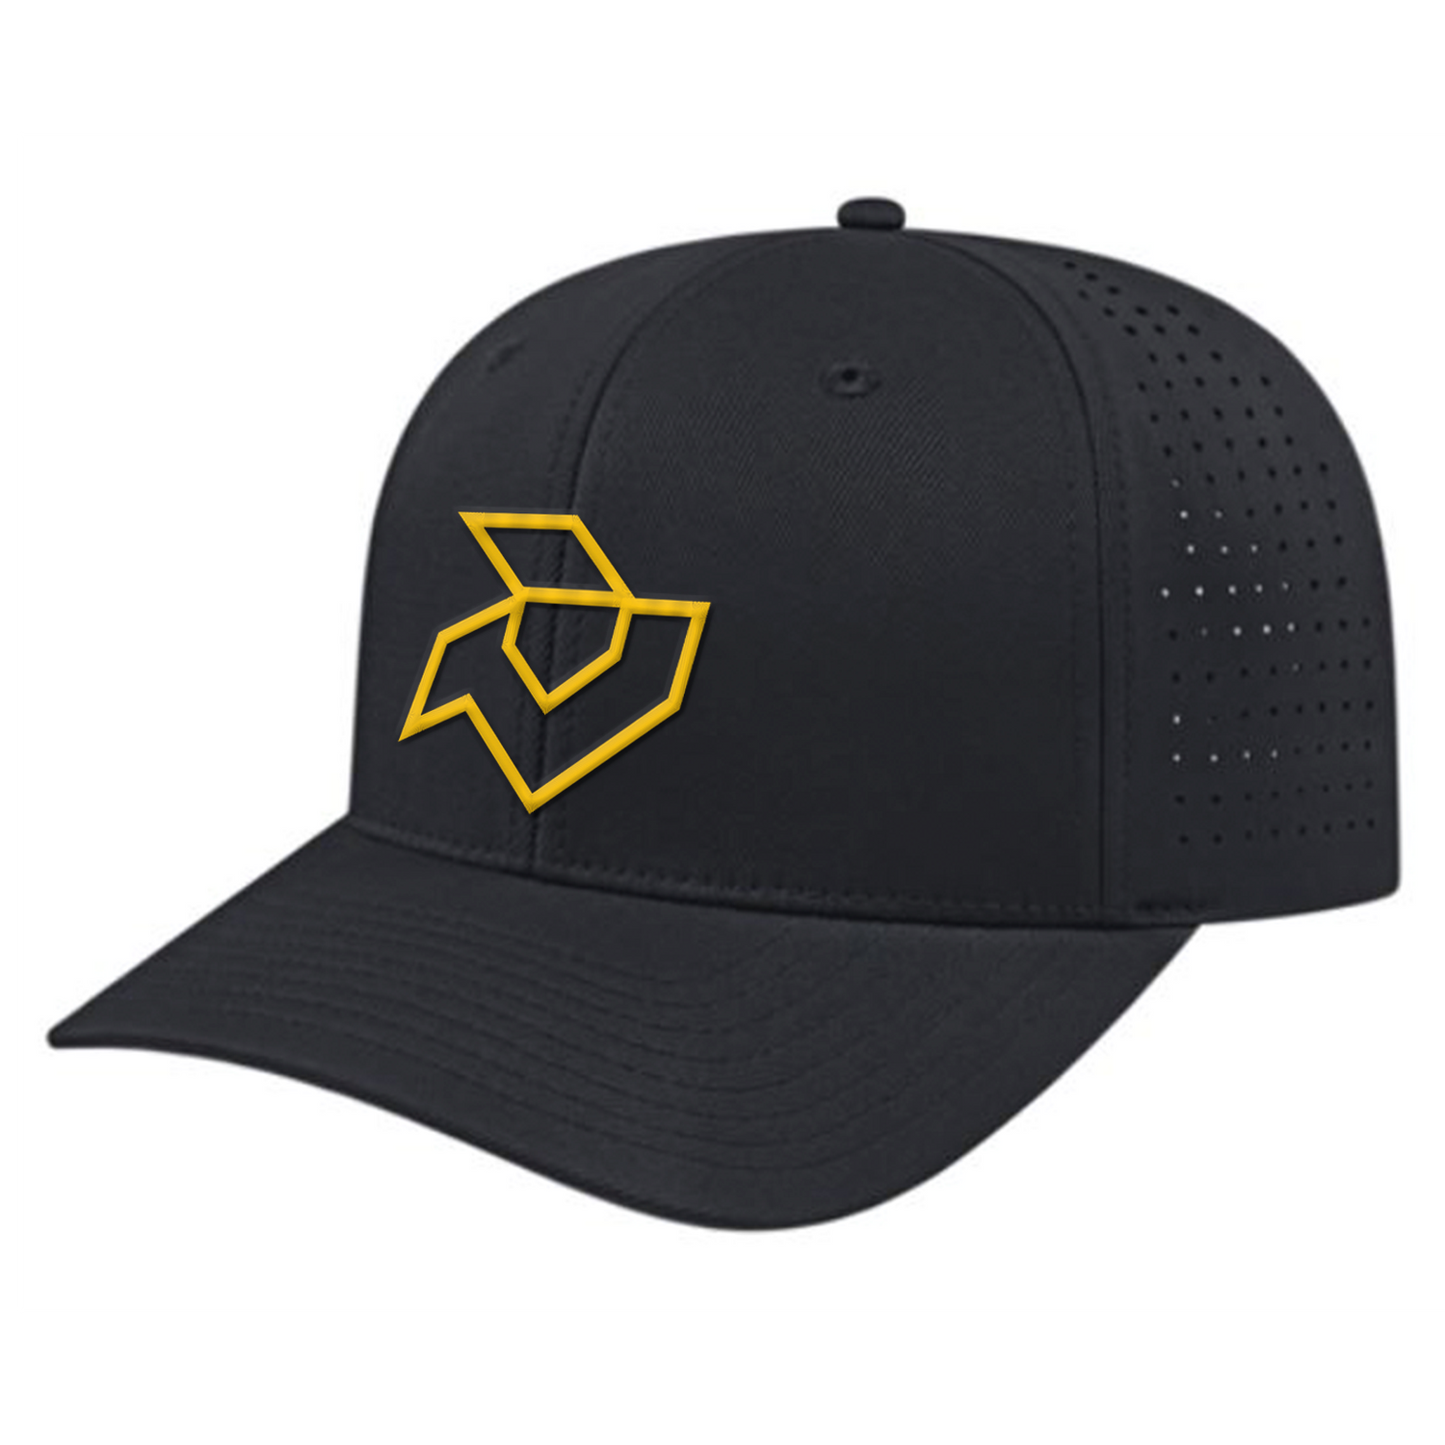 DeMarini Black Snapback Trucker Cap - Gold Logo